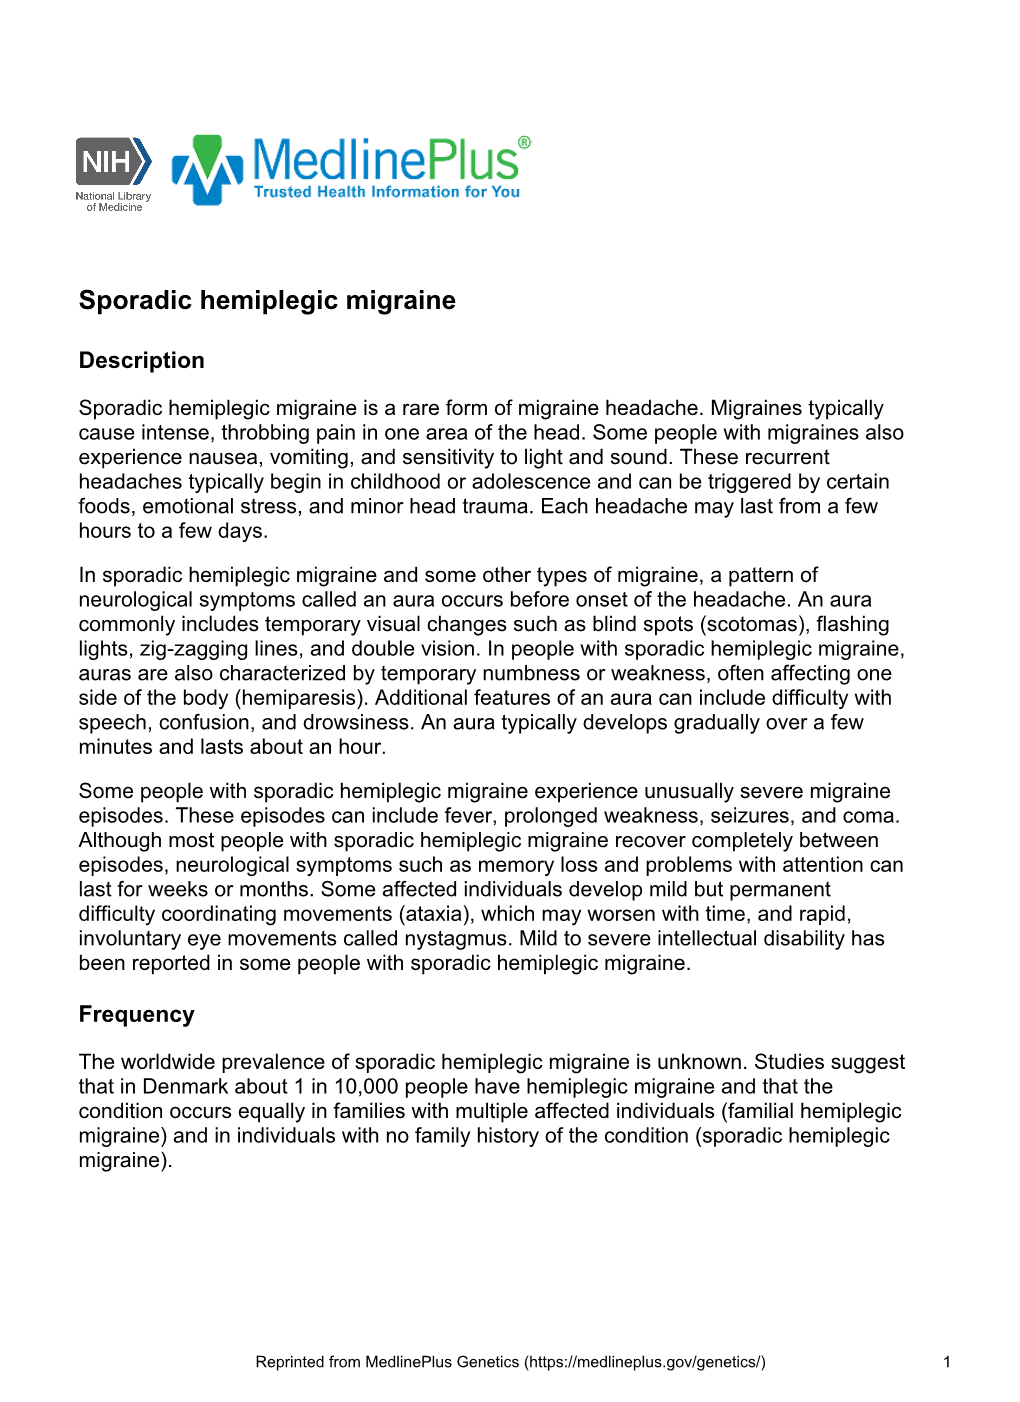 Sporadic Hemiplegic Migraine